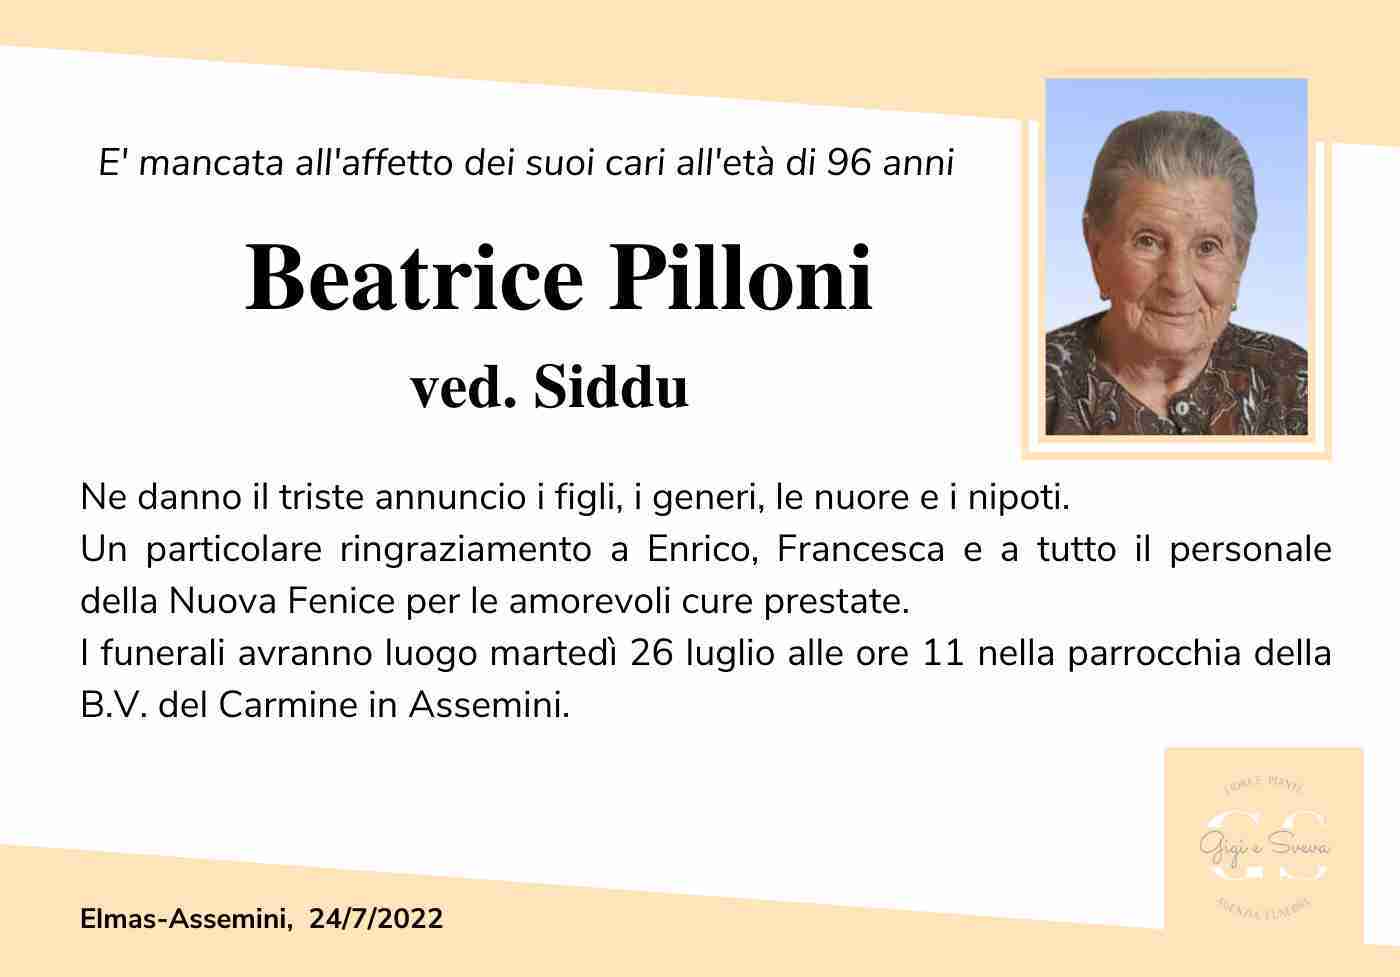 Beatrice Pilloni